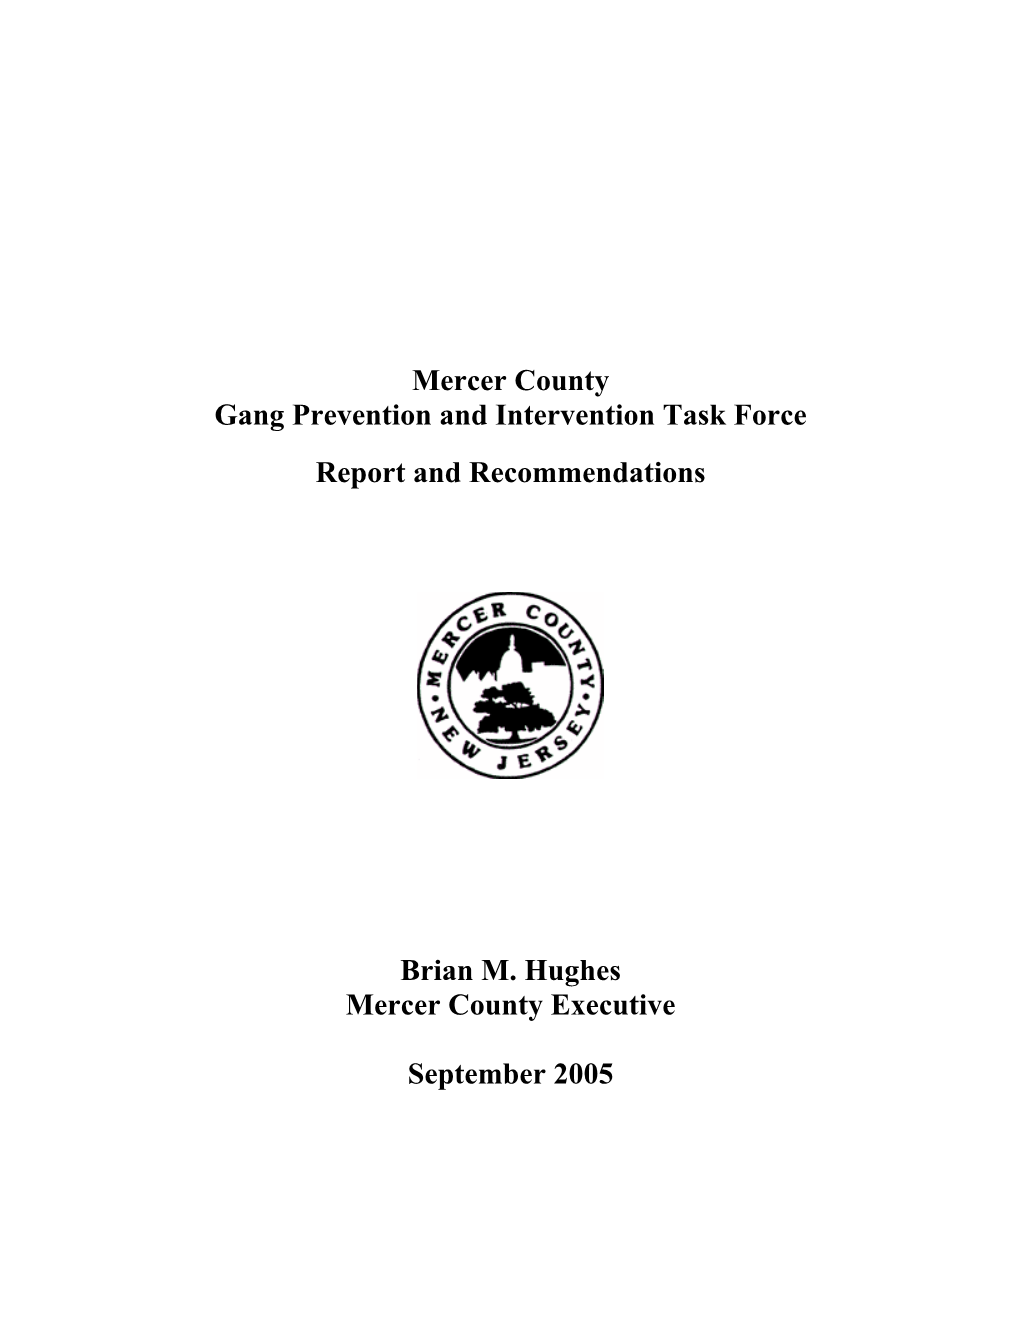 Mercer County Gang Task Force Report